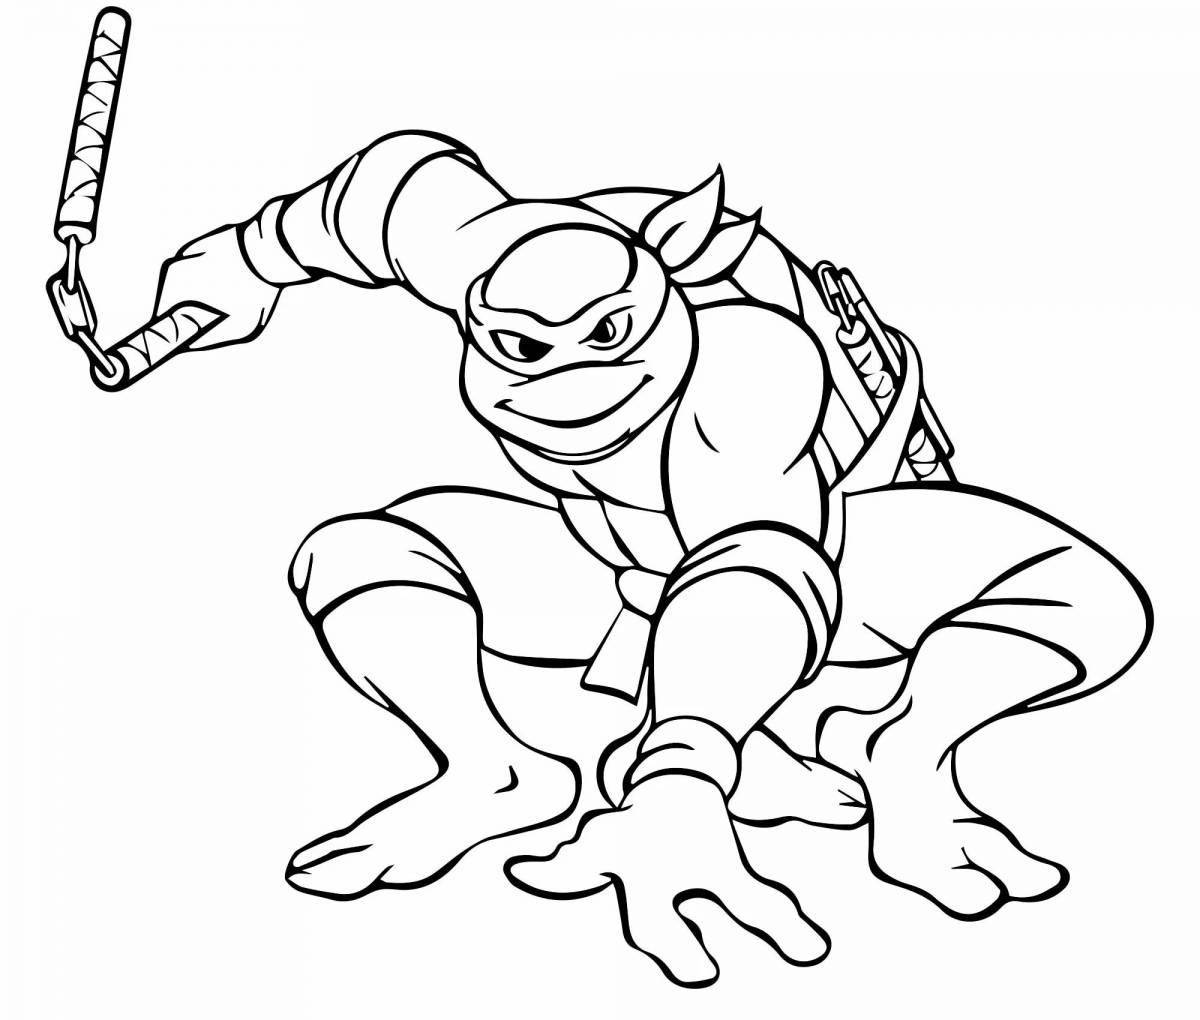 Teenage Mutant Ninja Turtles coloring book